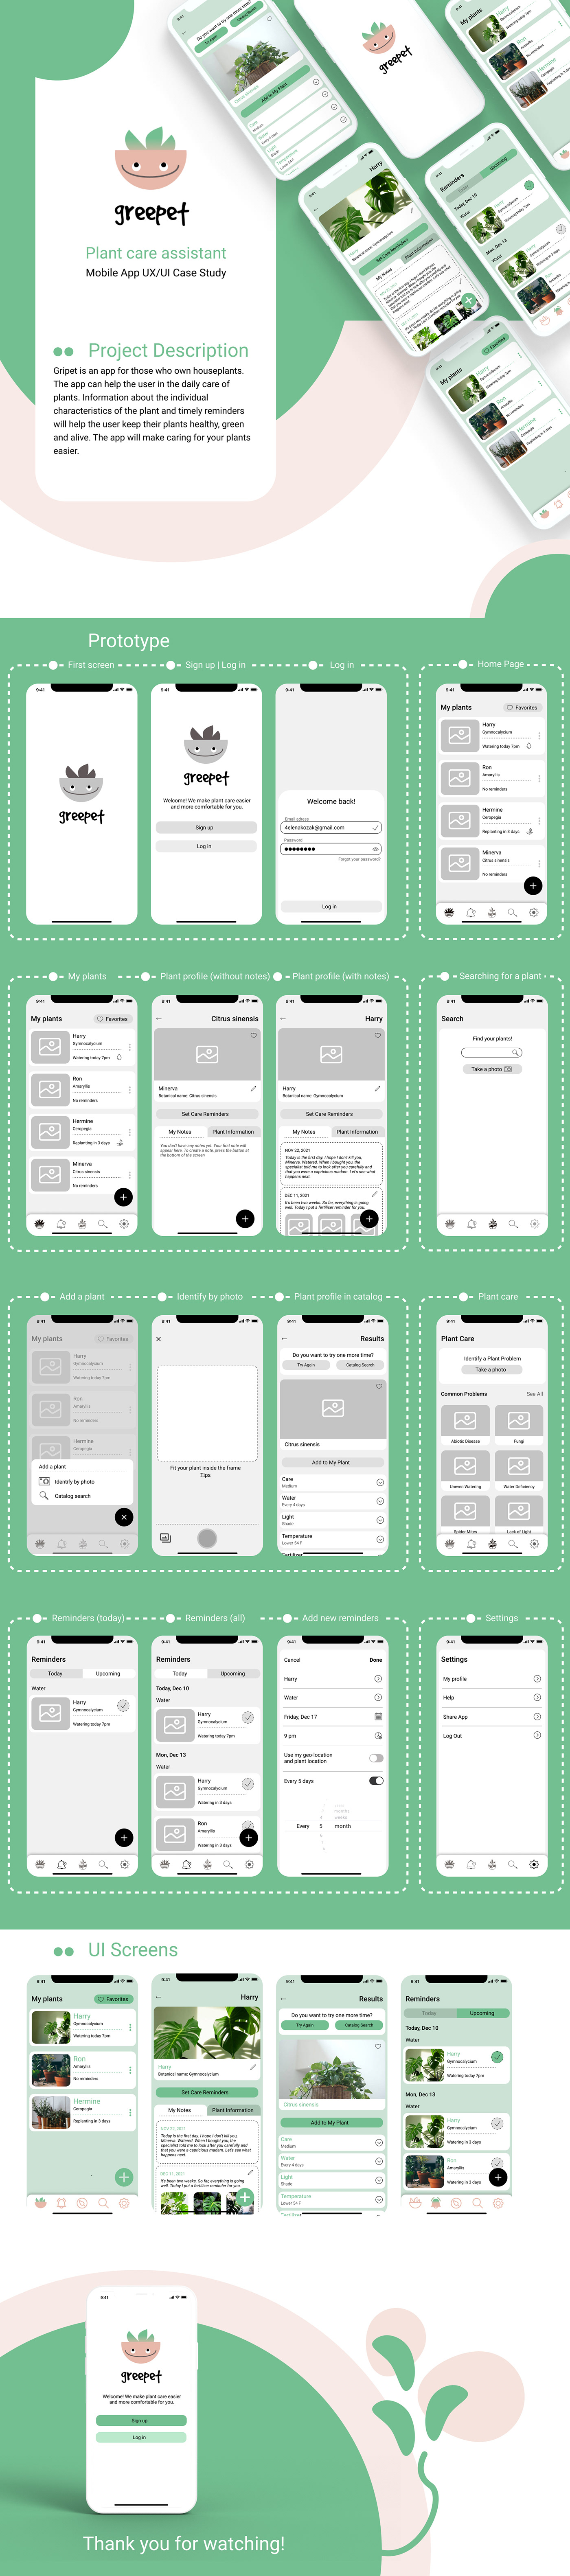 Case Study Mobile app user interface UX design ux/ui